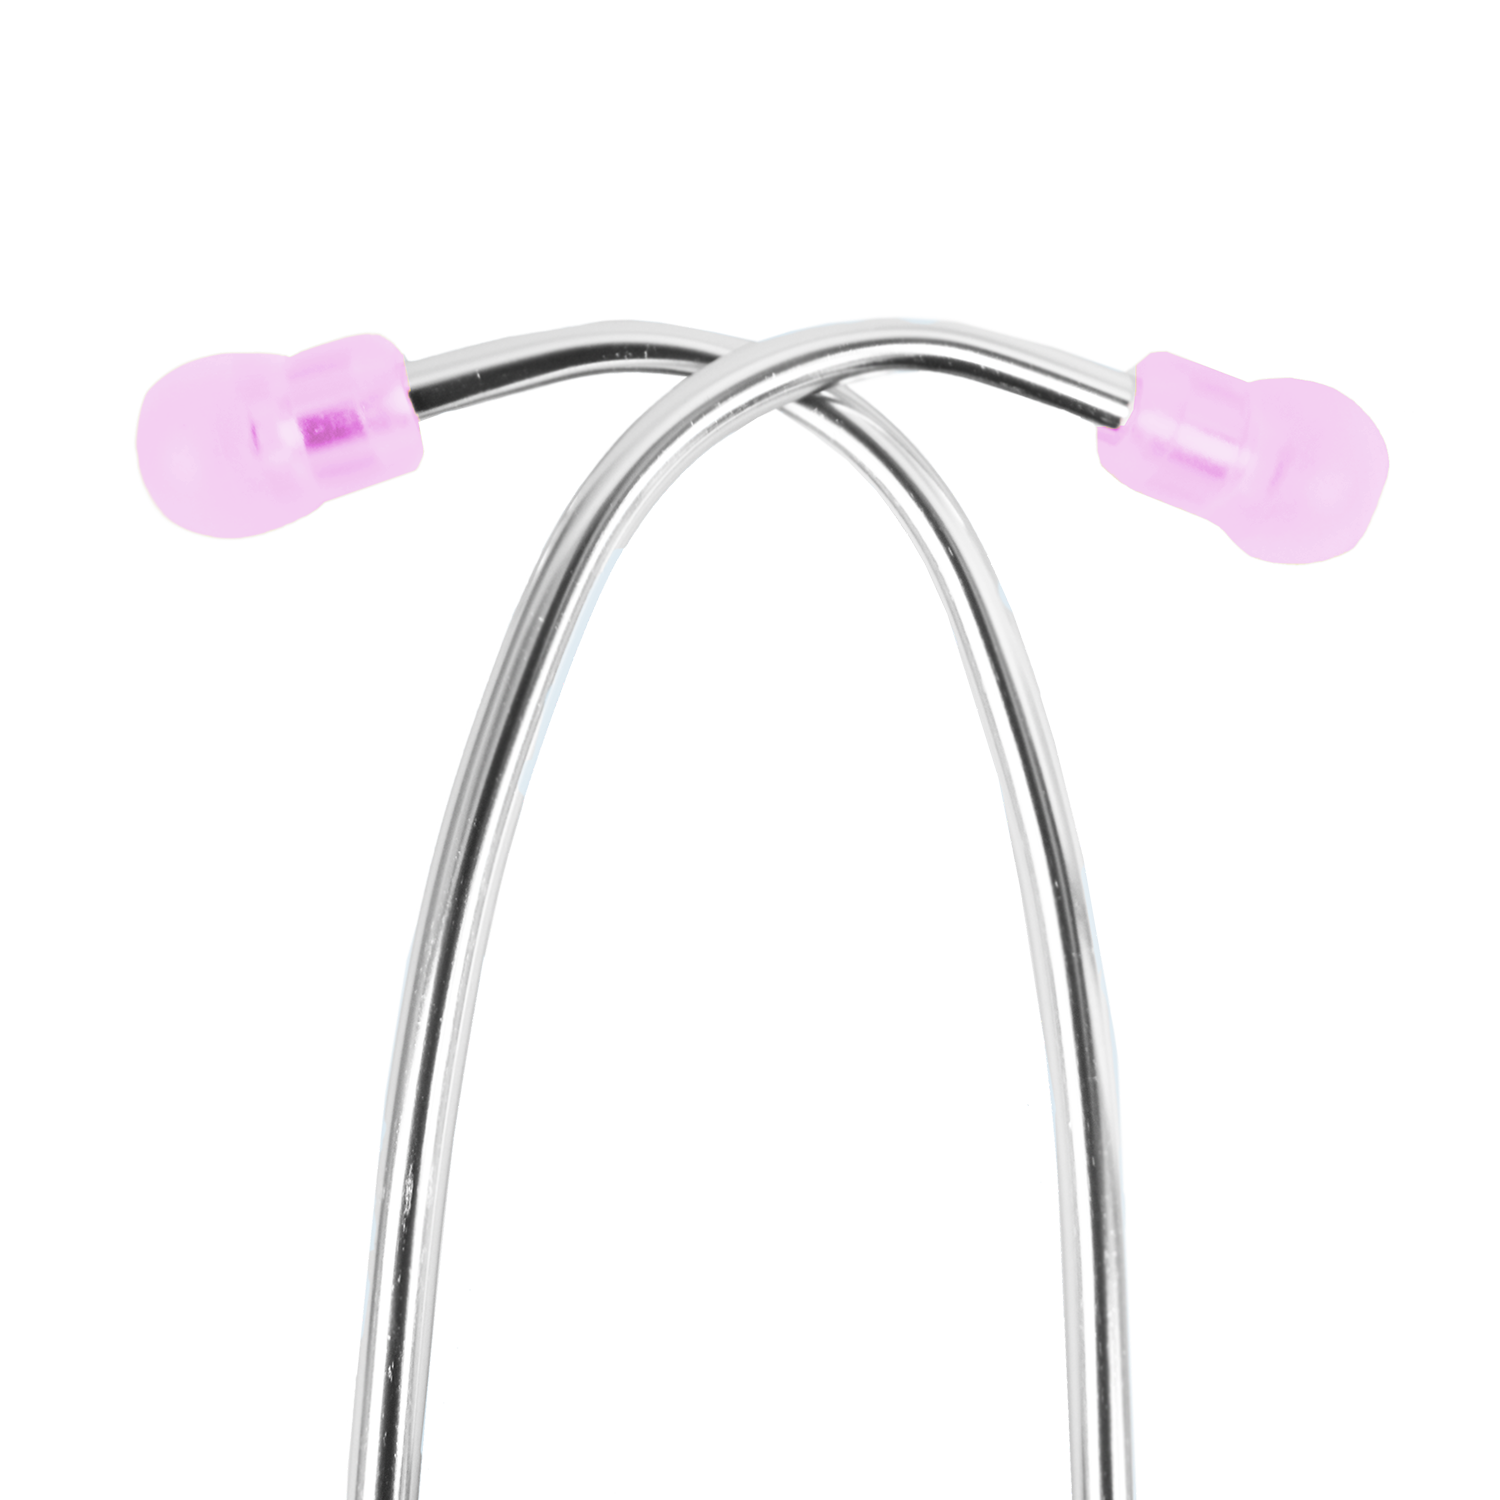 Large Gello Ear Tips Pink